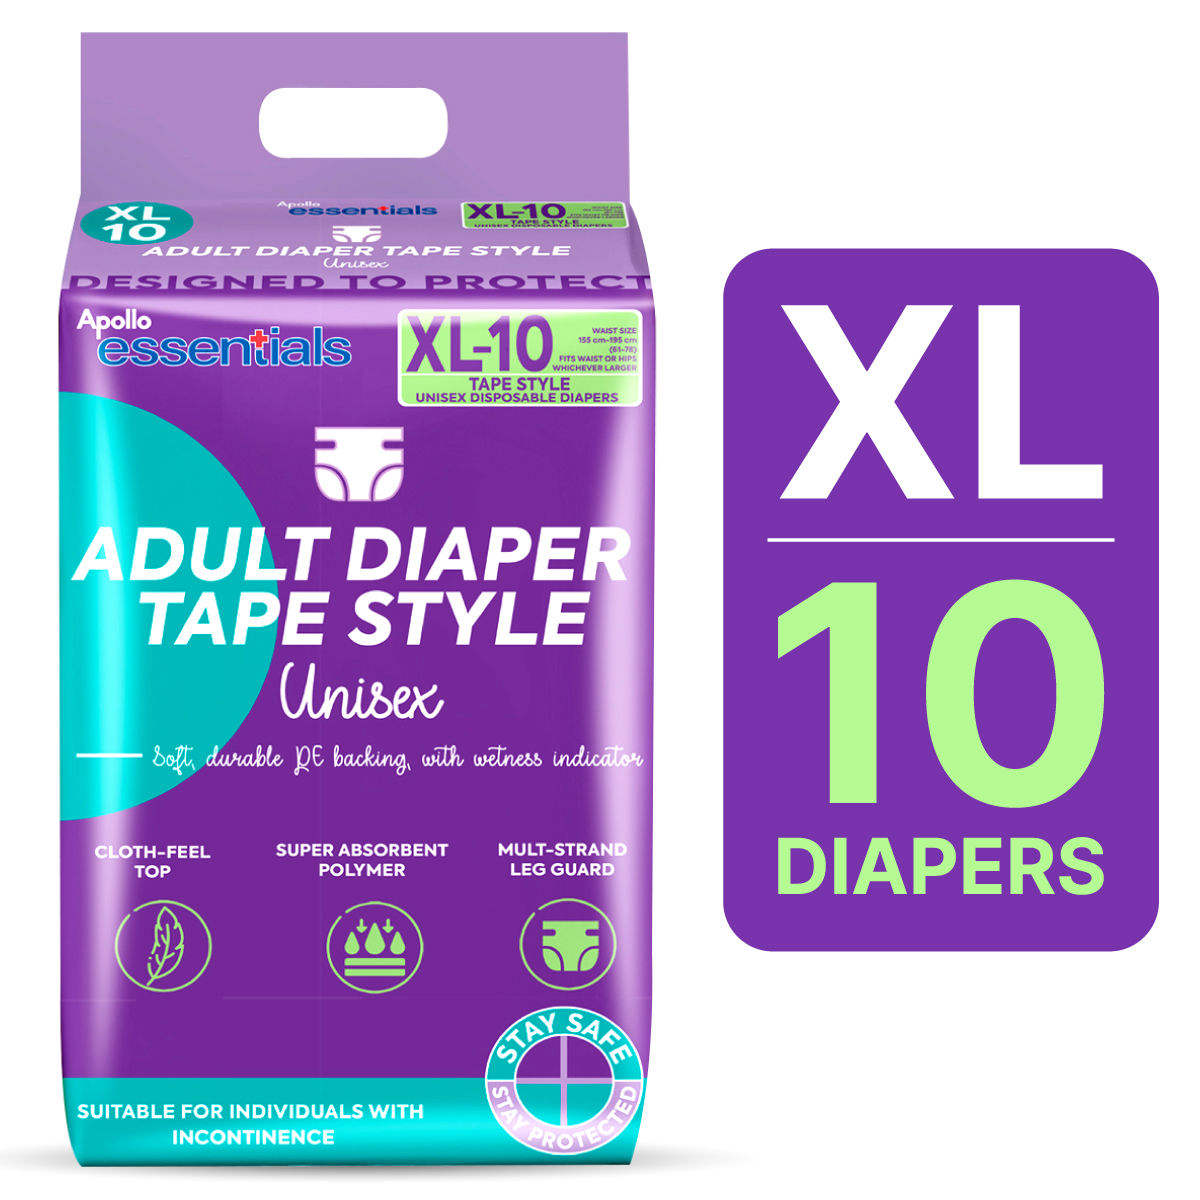 Buy Apollo Essentials Adult Diaper Tape Style Unisex XL, 10 Count Online